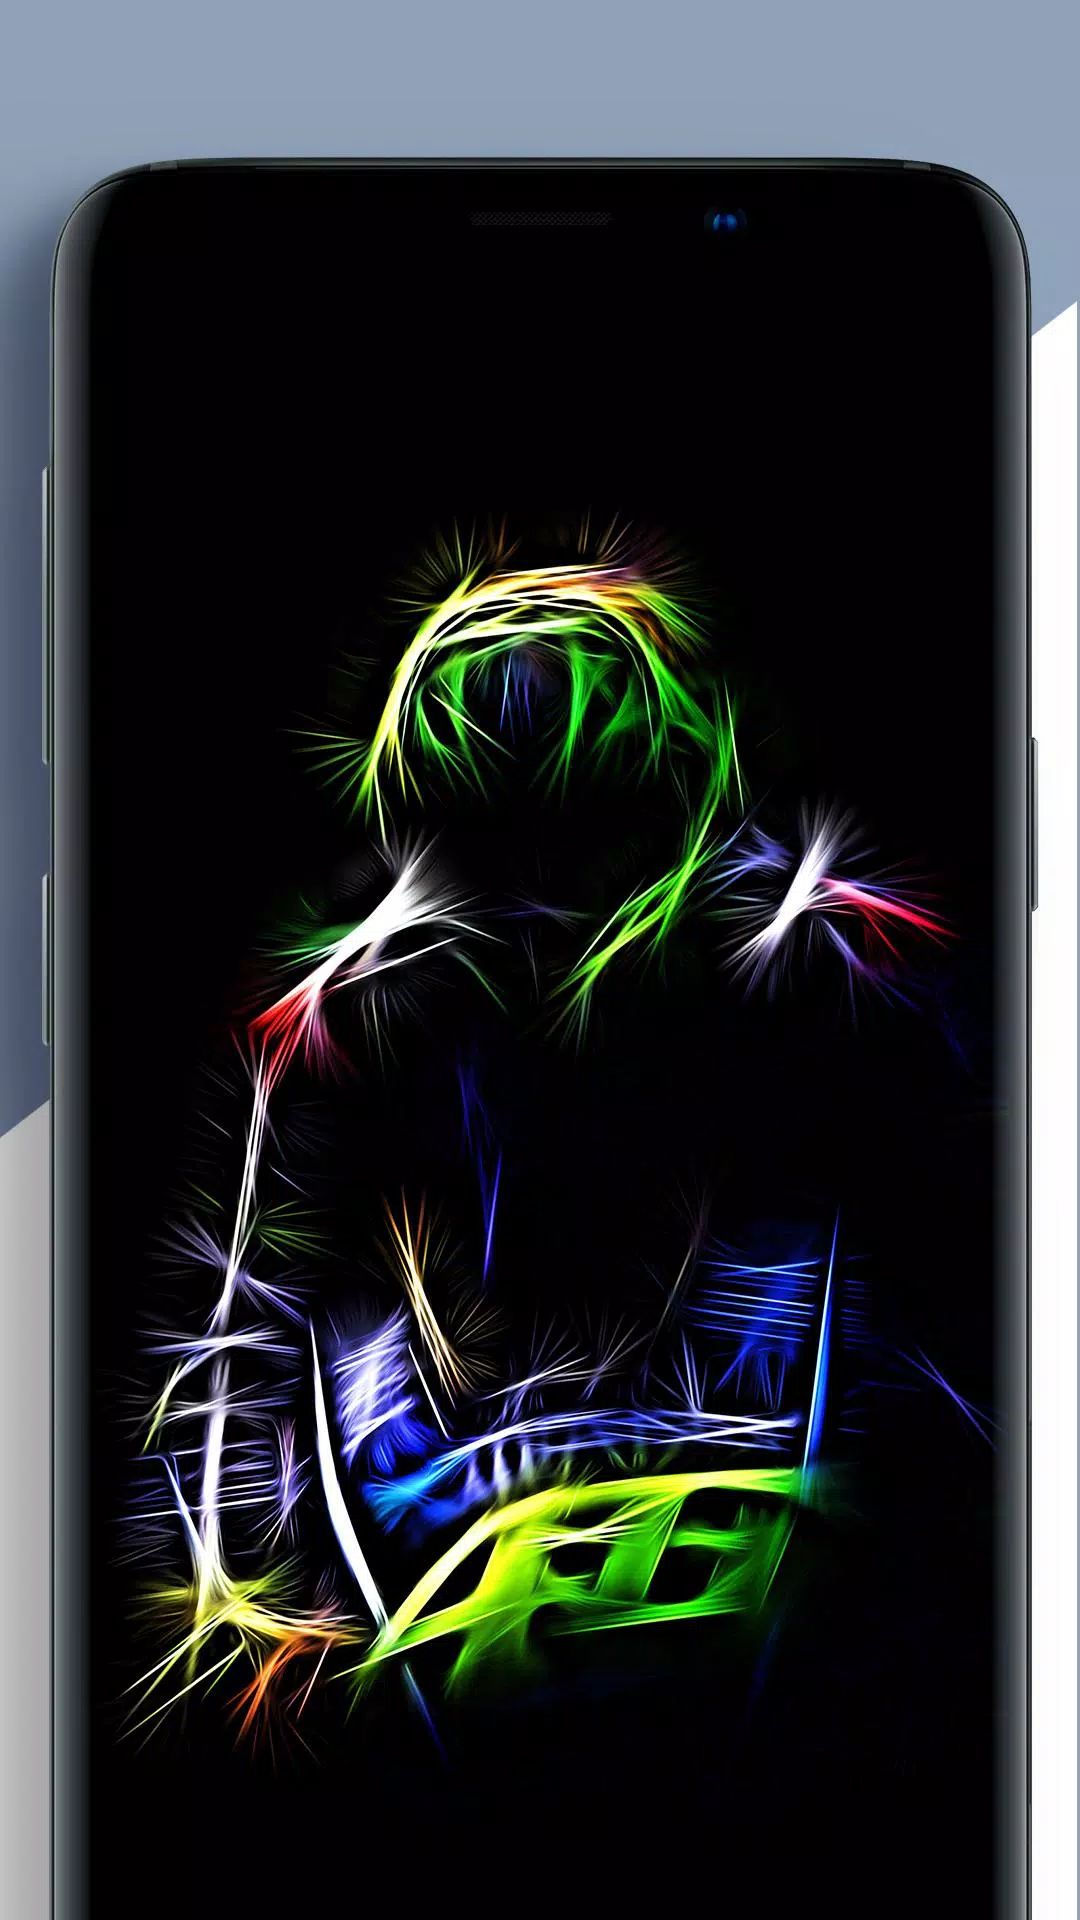  Valentino Rossi Hintergrundbild 1080x1920. VR46 Valentino Rossi HD Wallpaper LockScreen APK für Android herunterladen